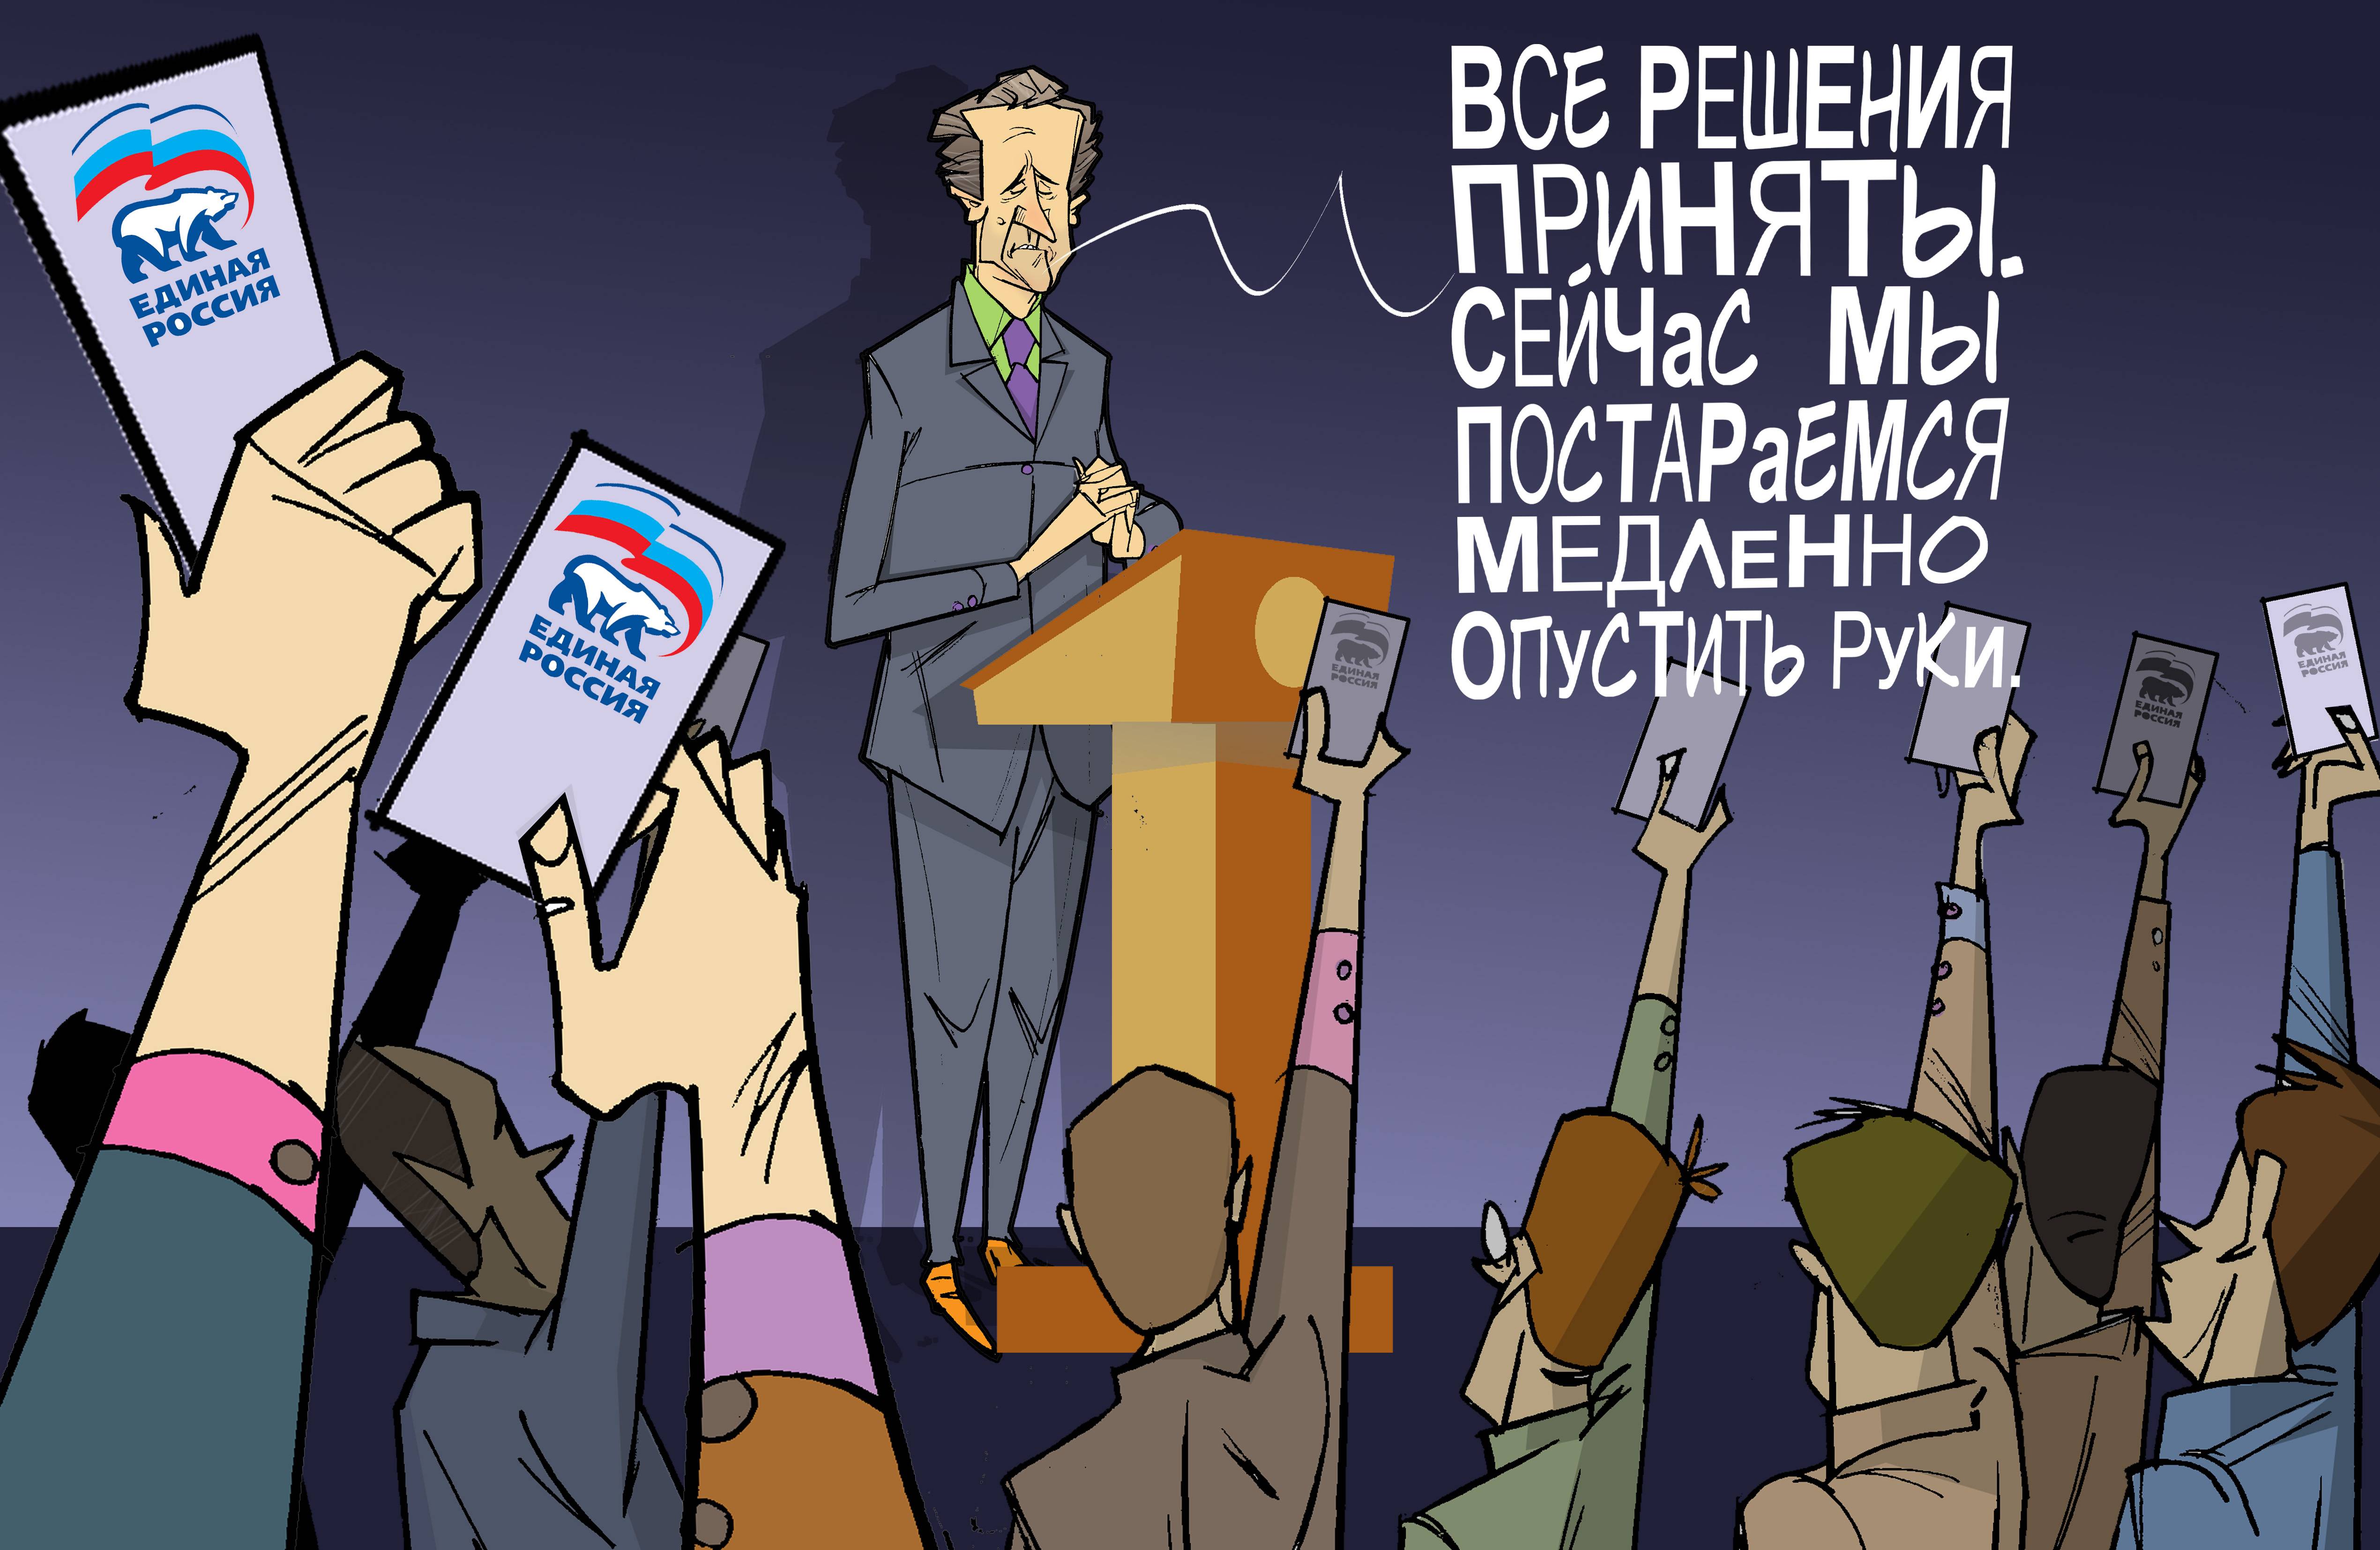 Один за всех. #ПрезидентУР #Волков #ЕдинаяРоссия © Газета "День" 2013